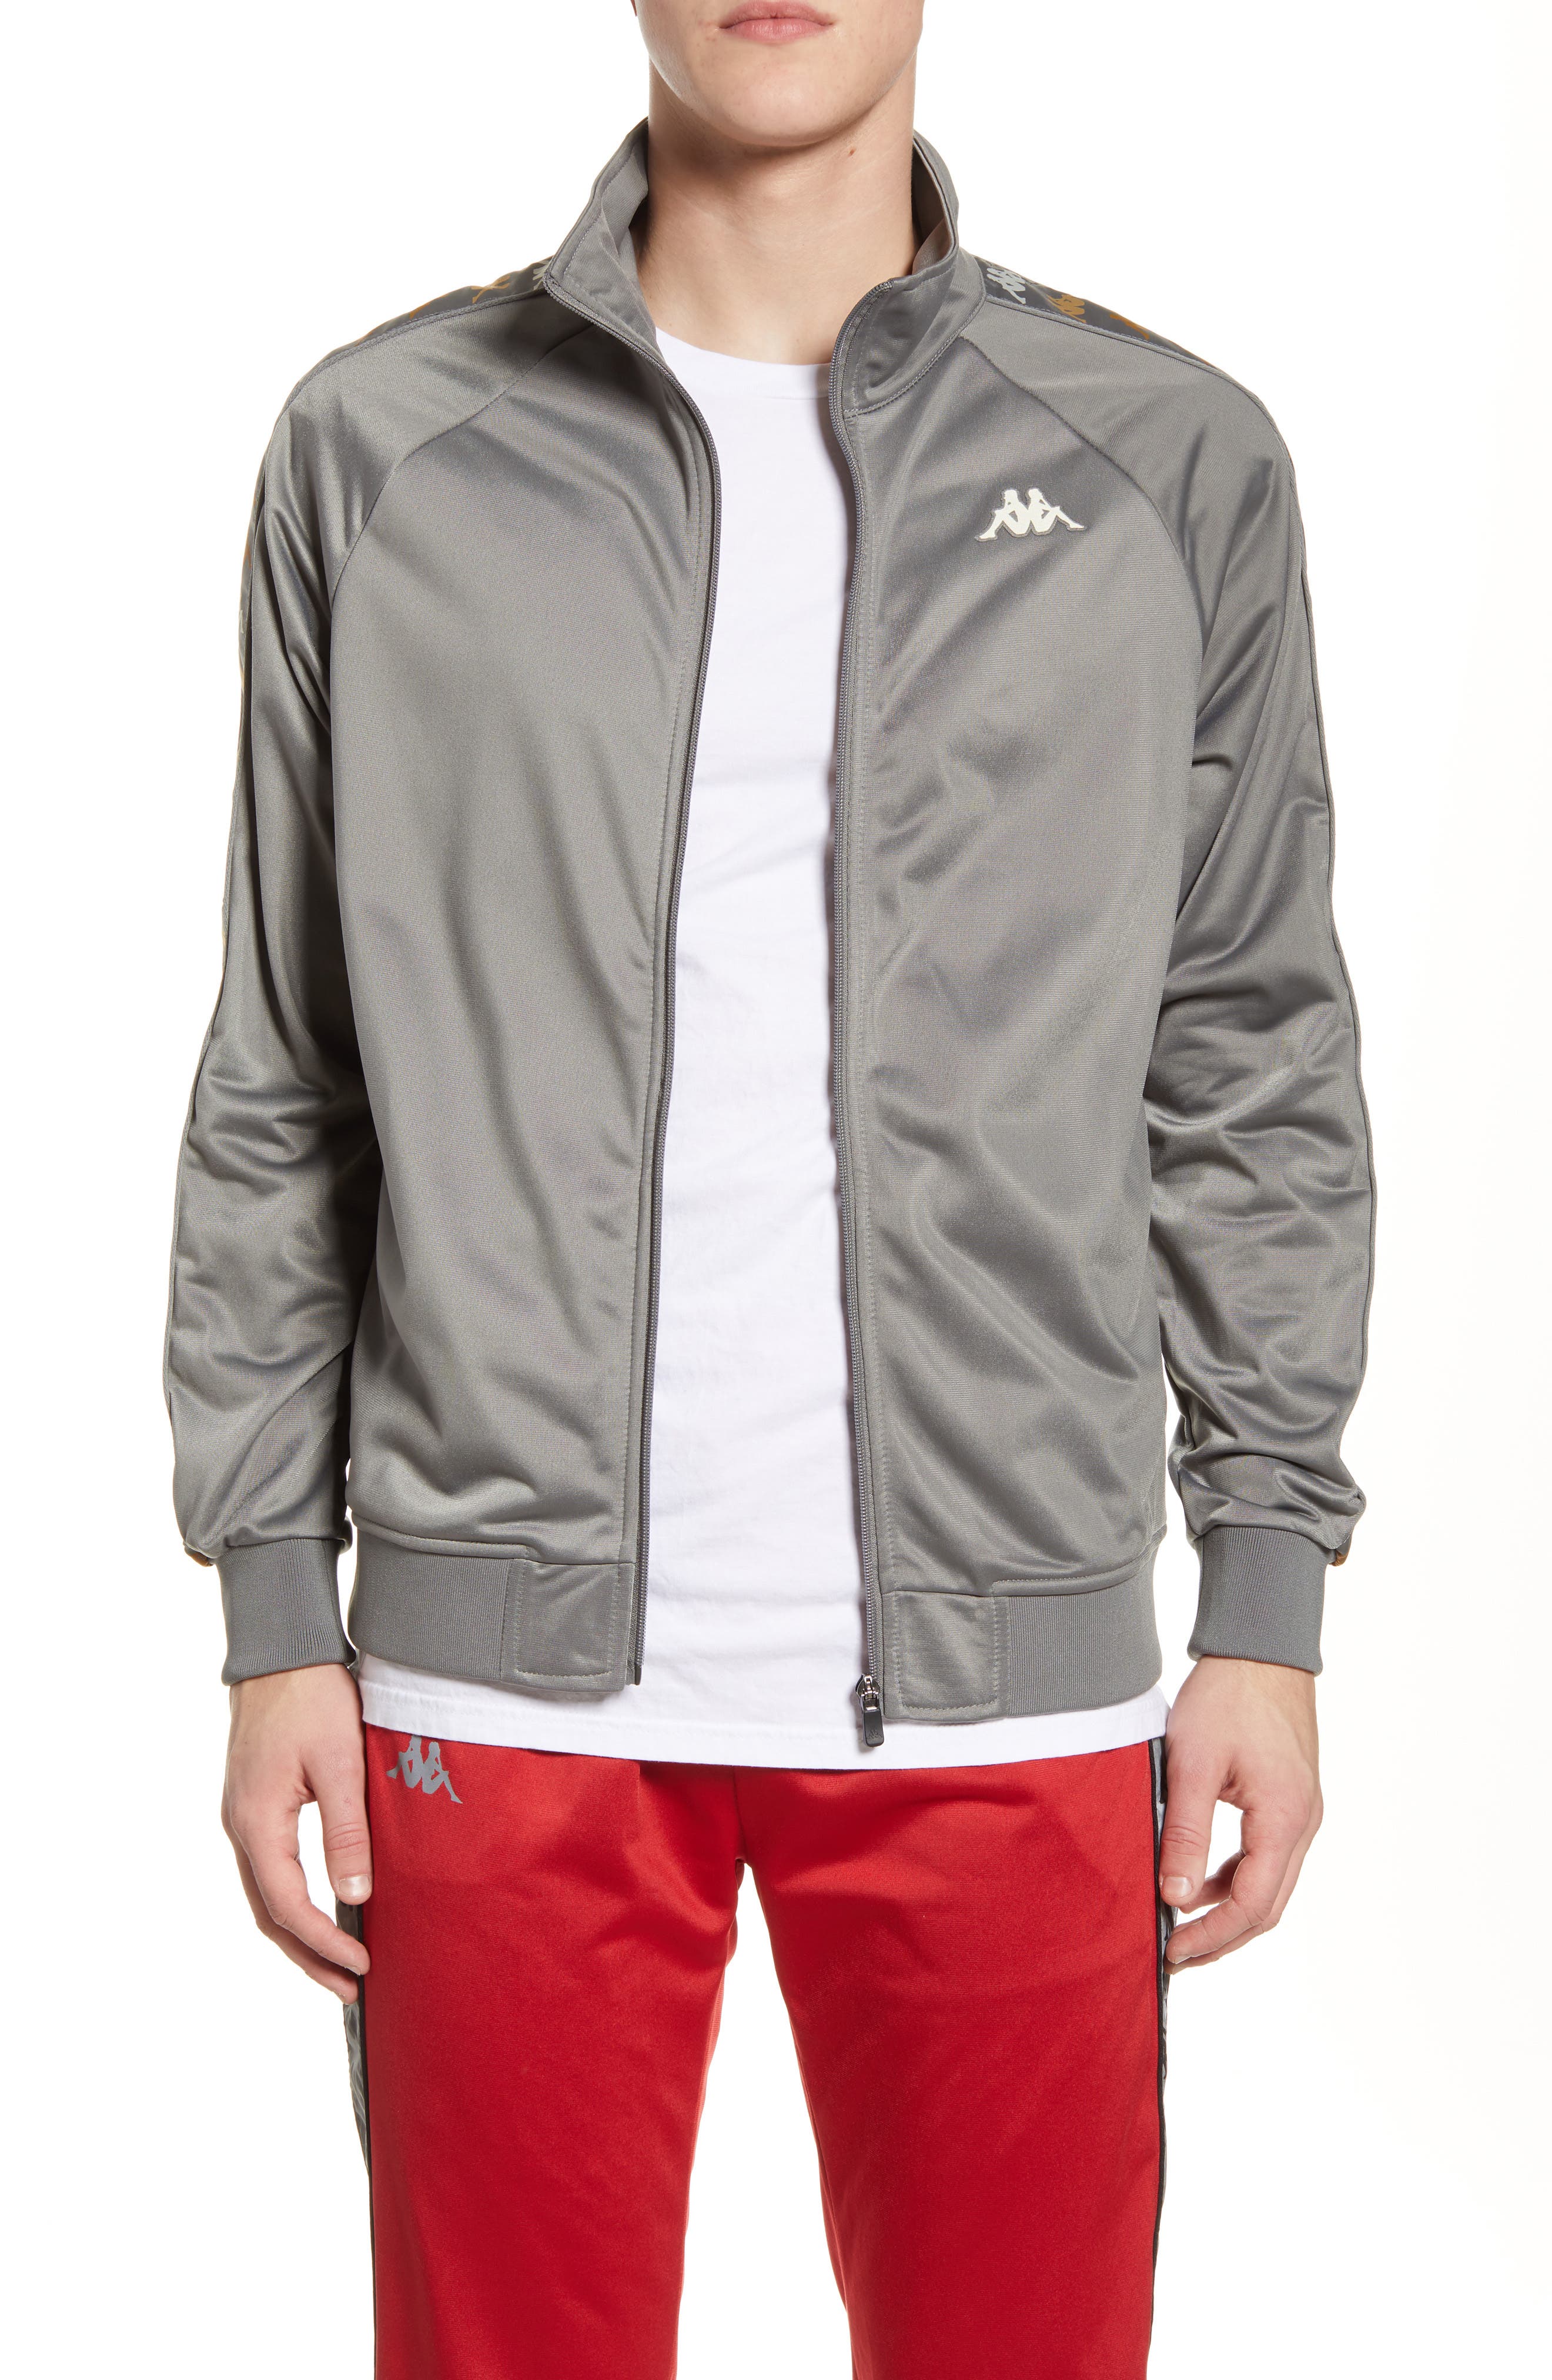 kappa grey jacket